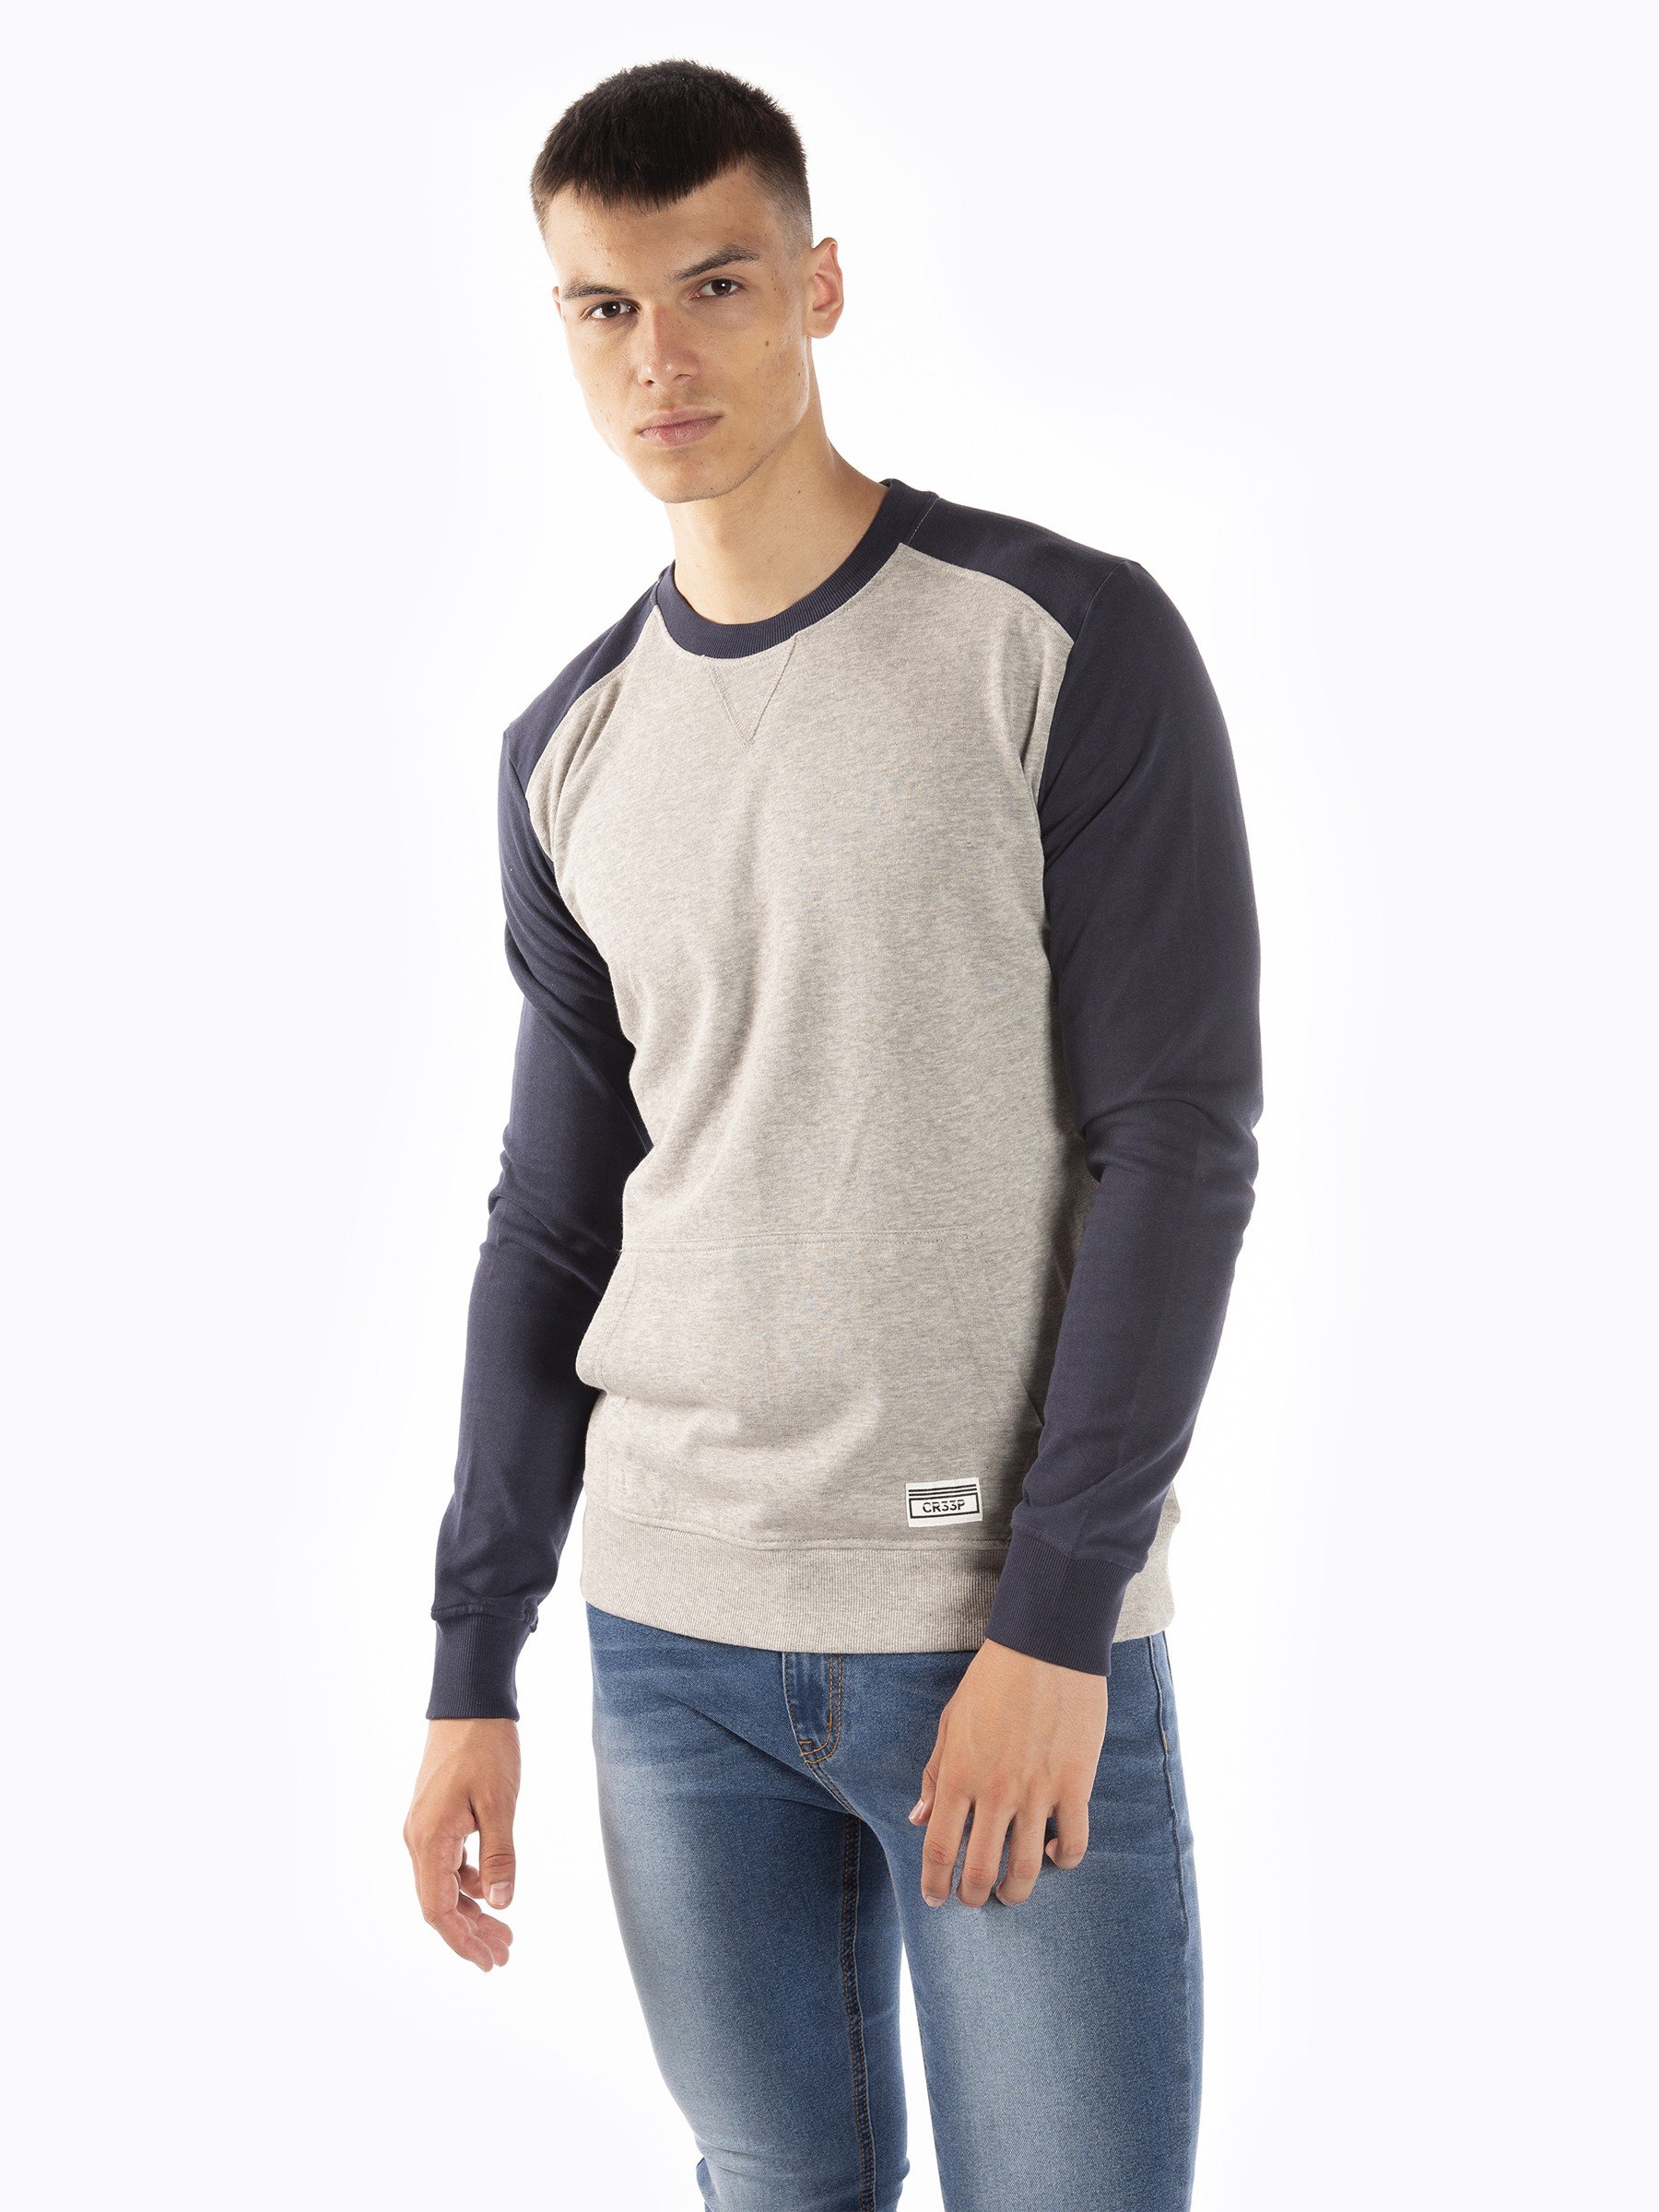 Sweatshirt with kangaroo pocket and contrast sleeves | GATE